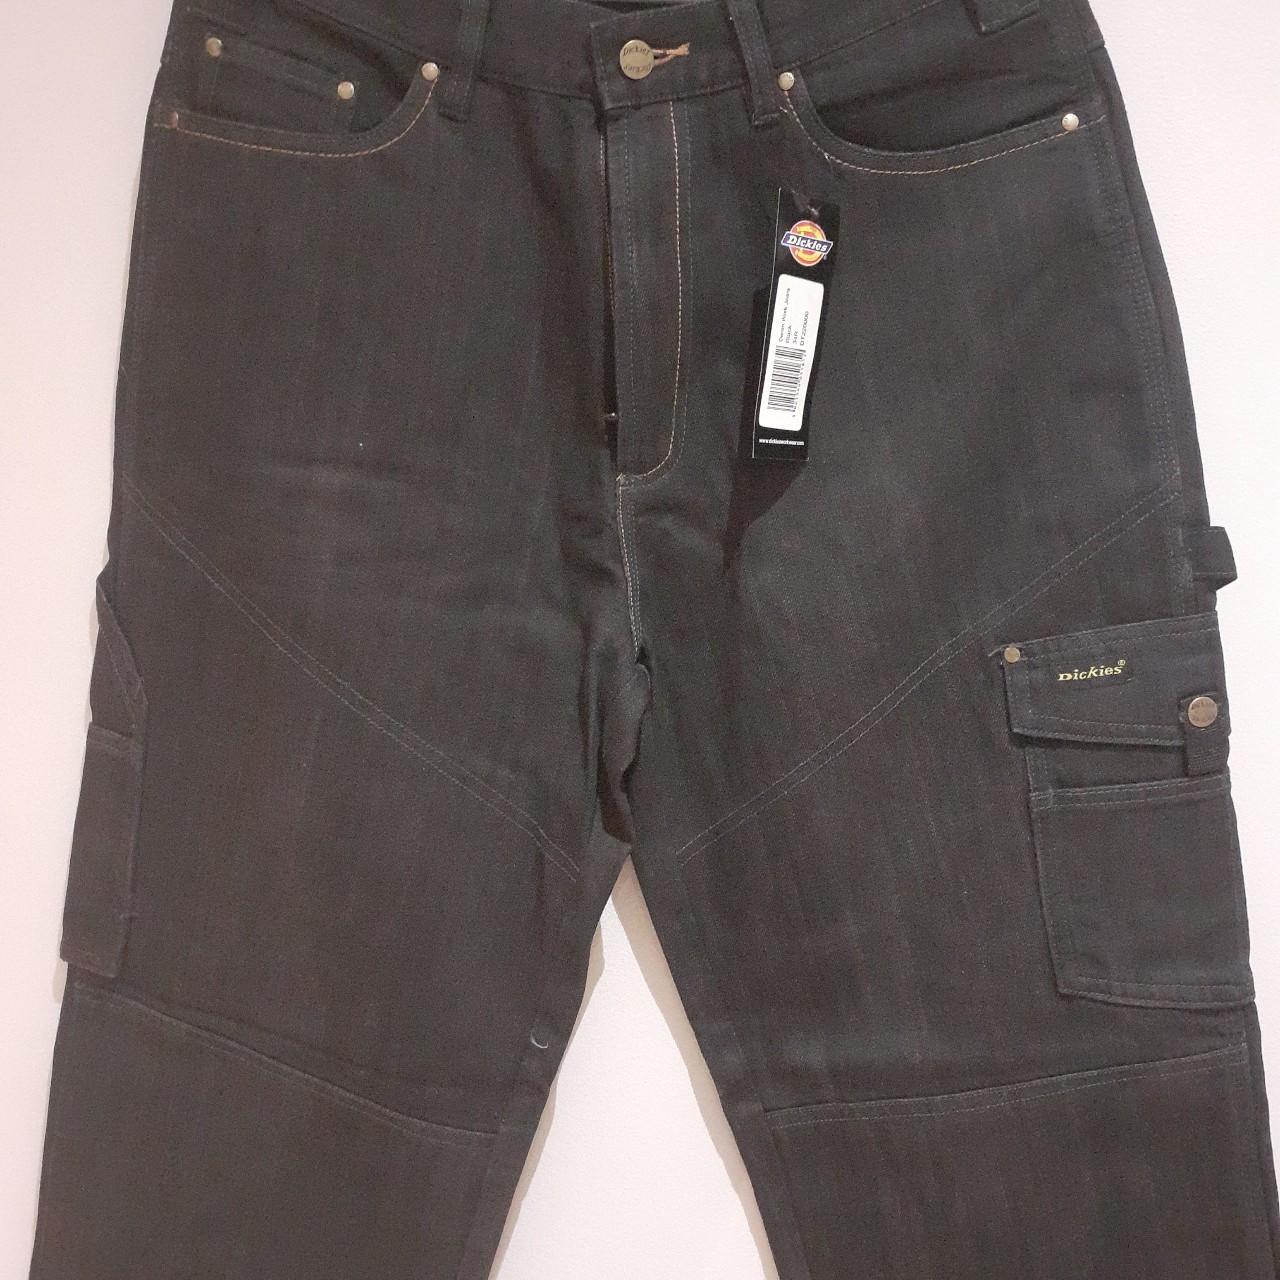 Classic dickies dt22 carpenter jeans in black 34